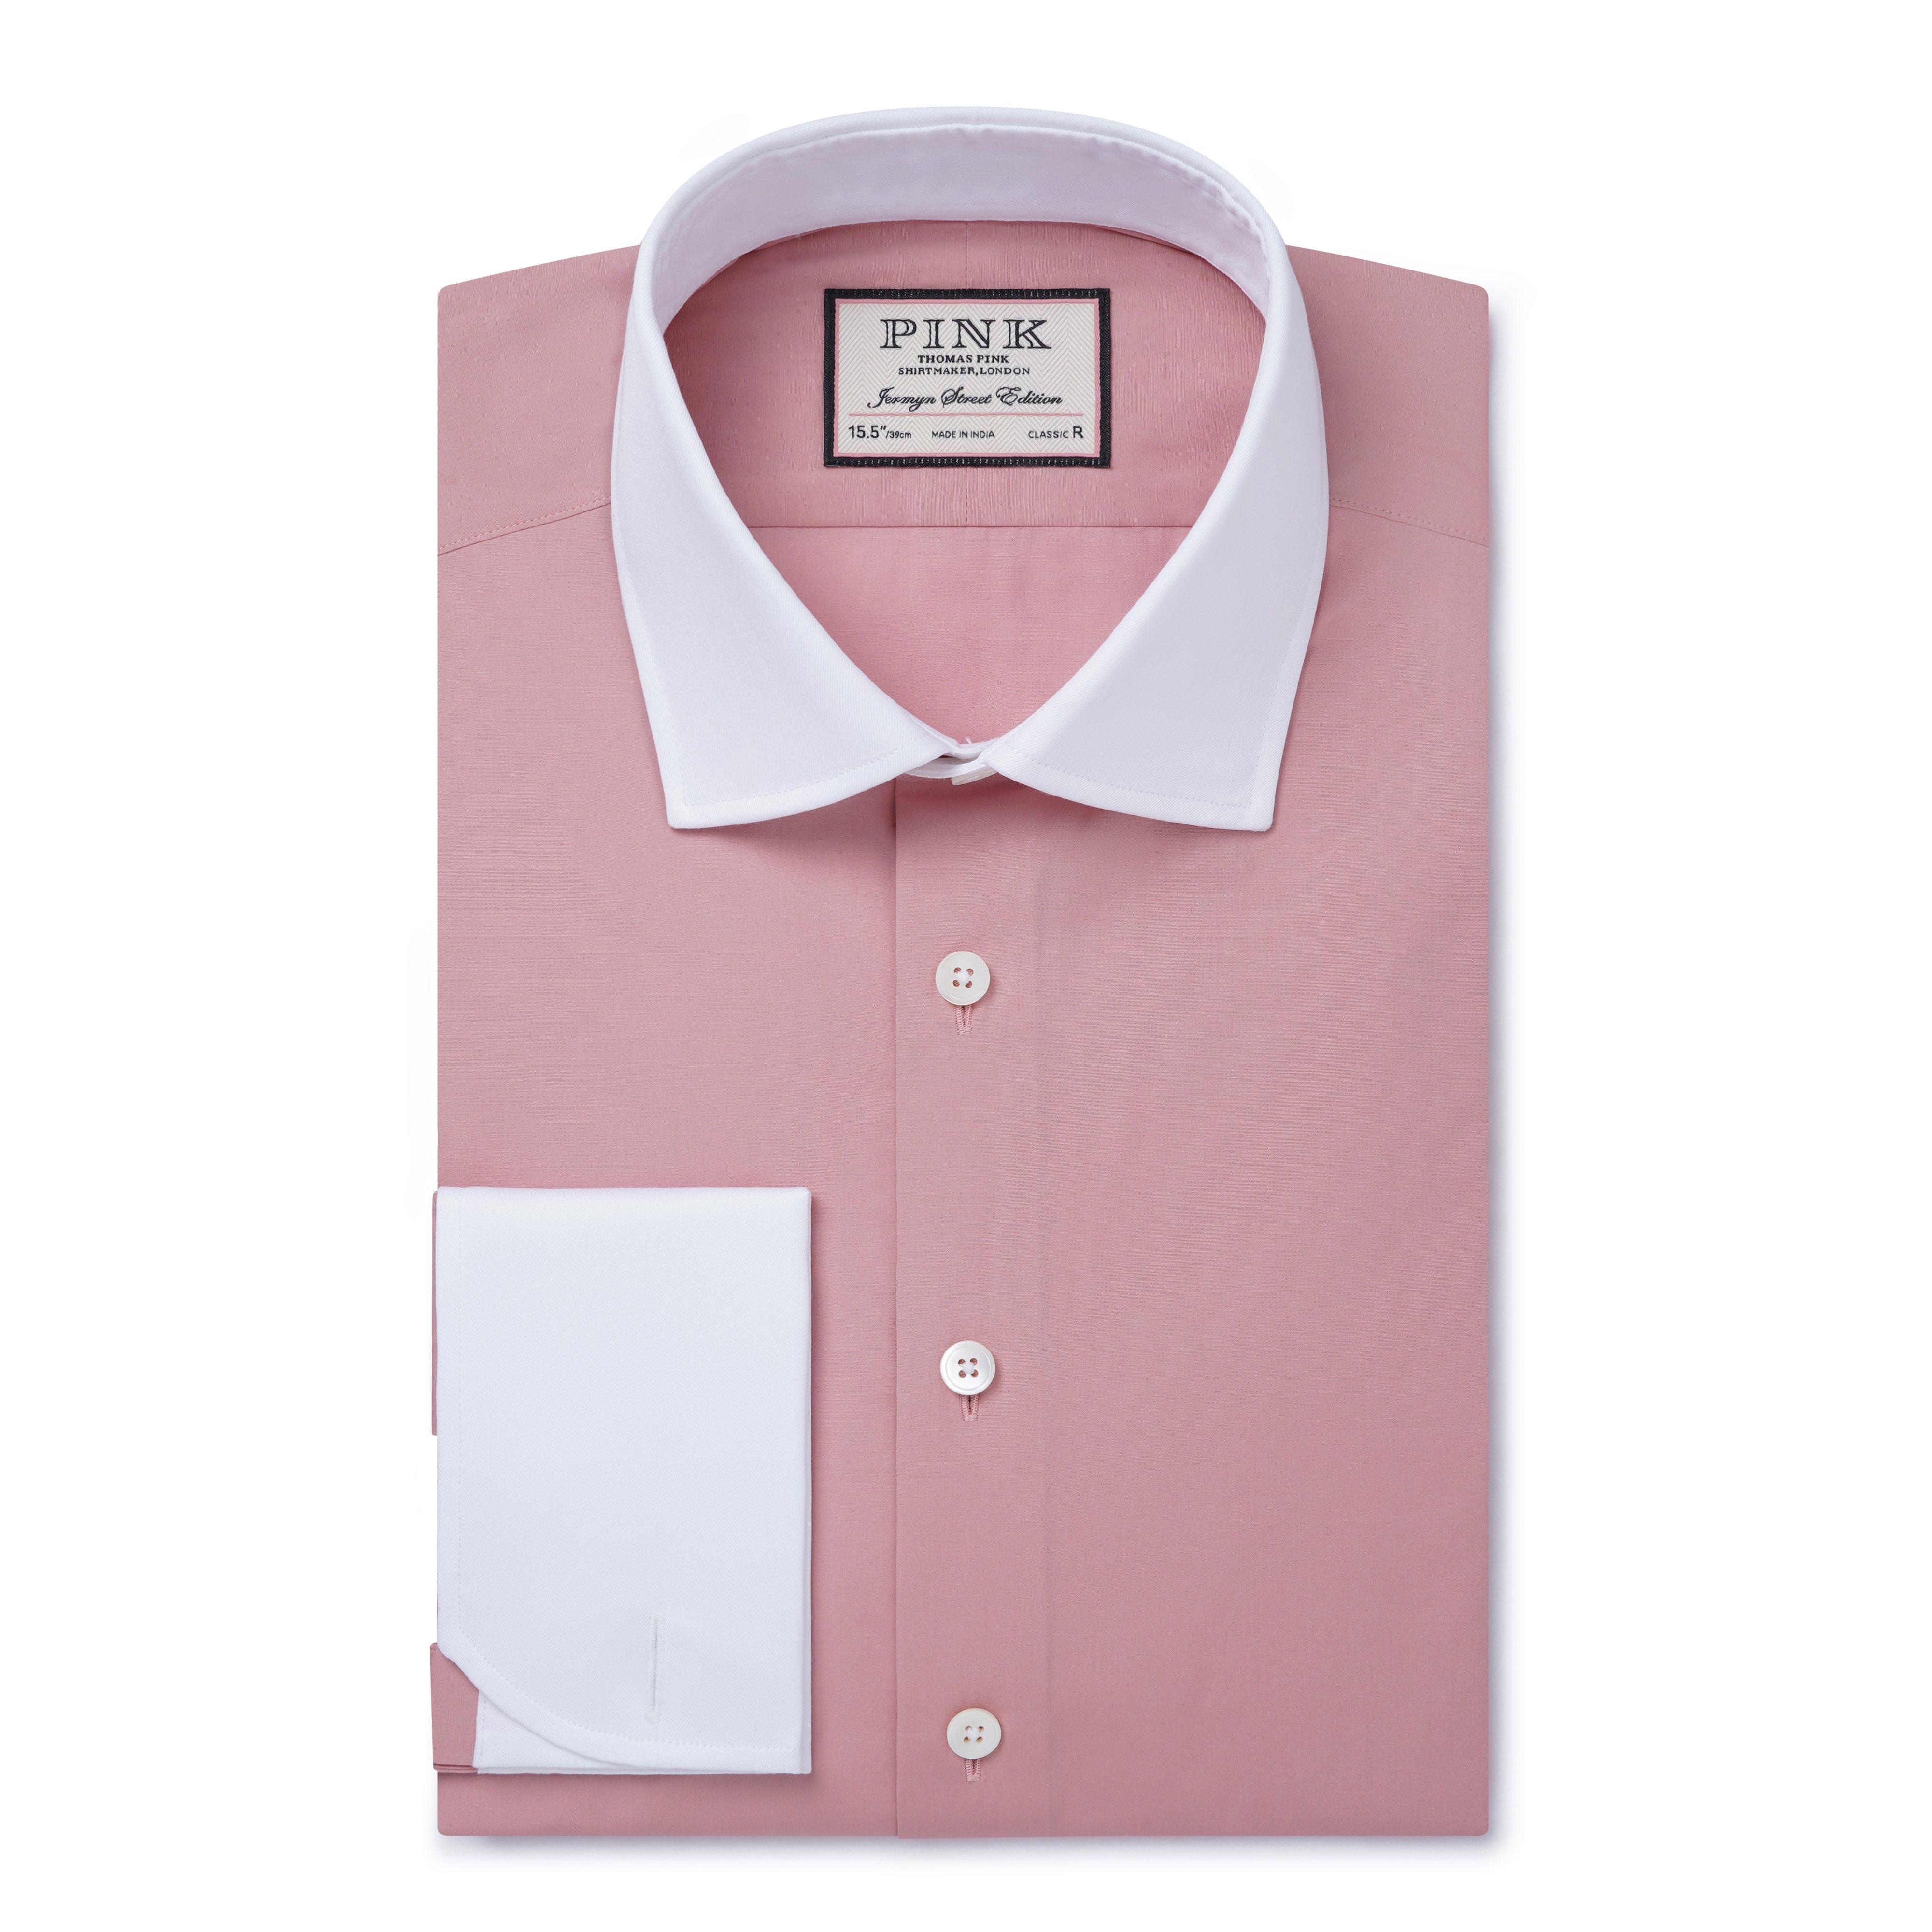 Thomas Pink  Cutaway collar, Thomas pink, Shirts